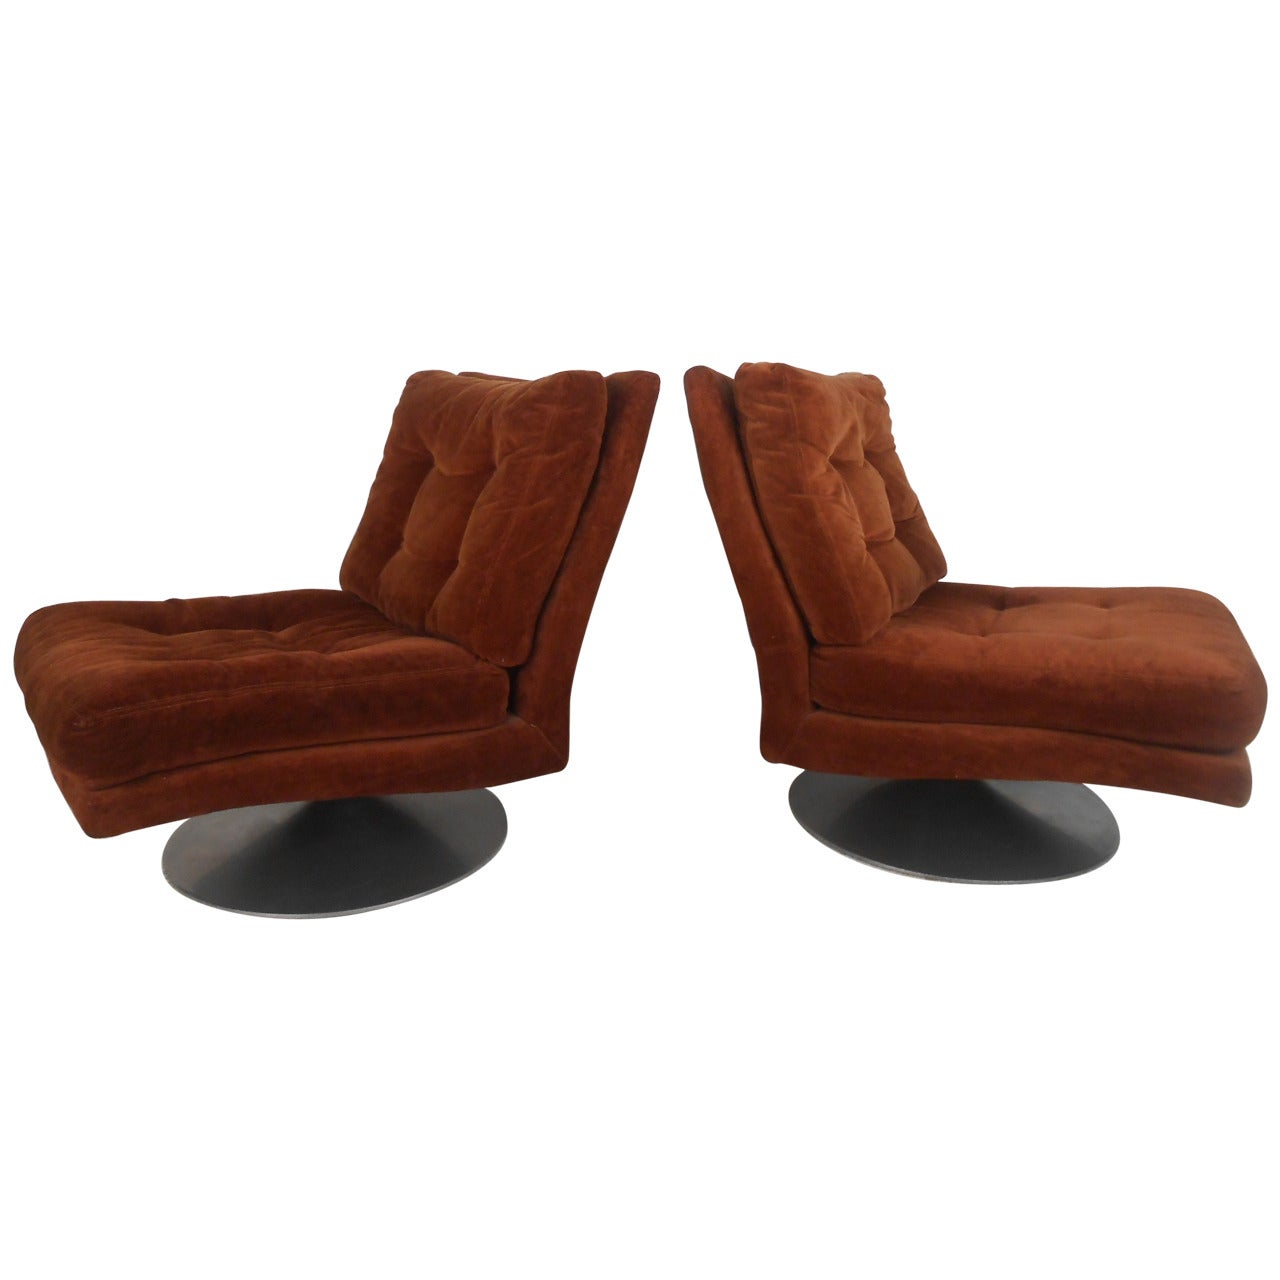 Milo Baughman Lounge Chairs for Thayer Coggin